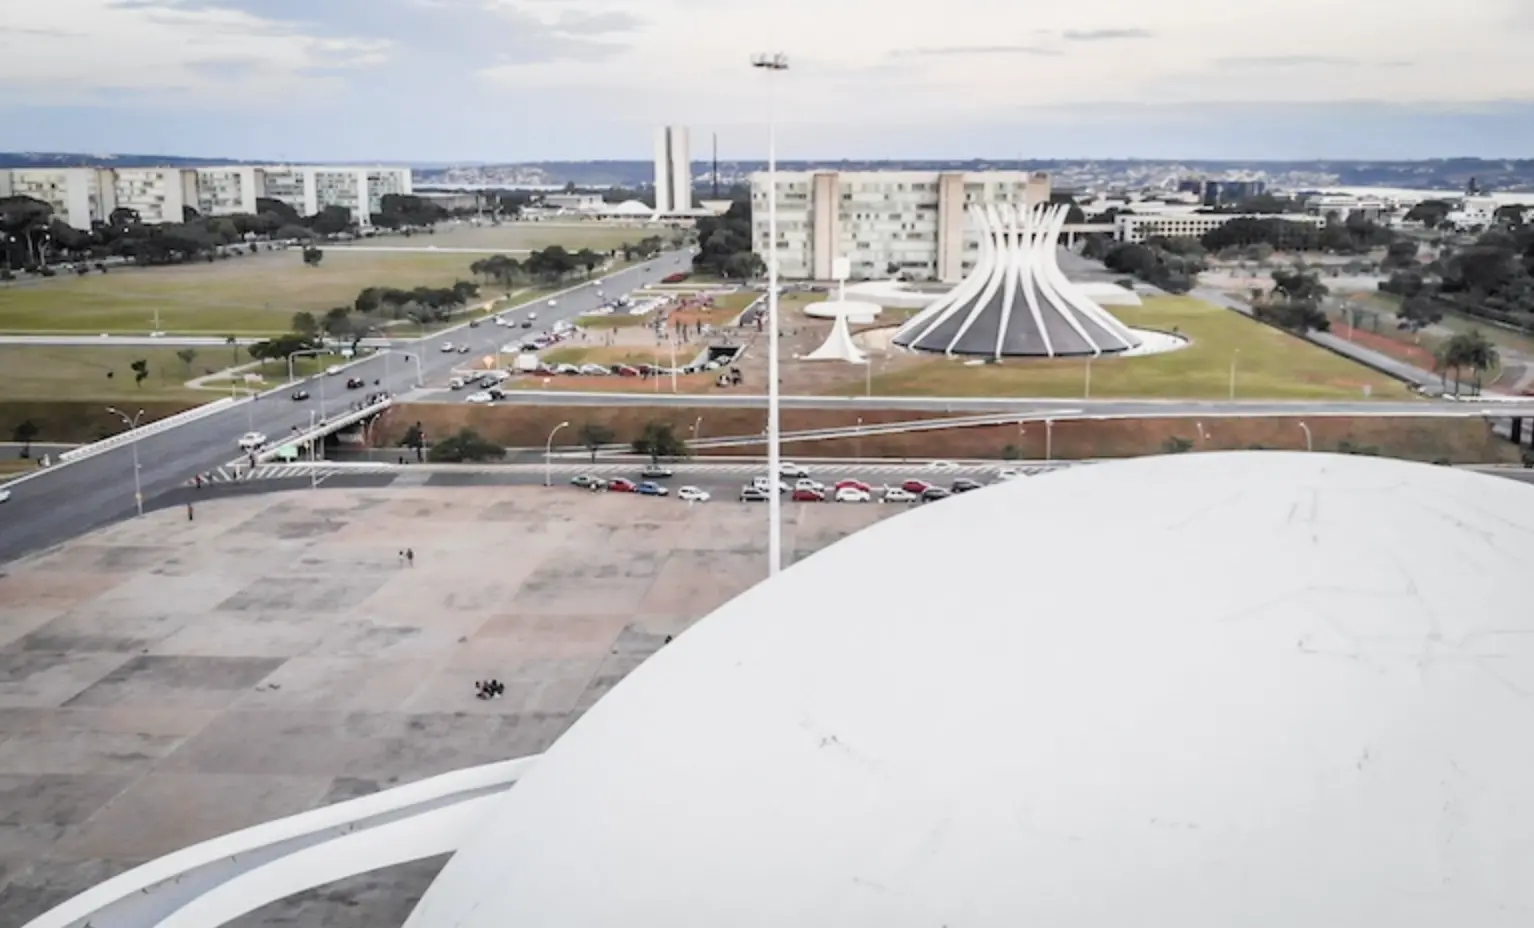 View of Brasília.